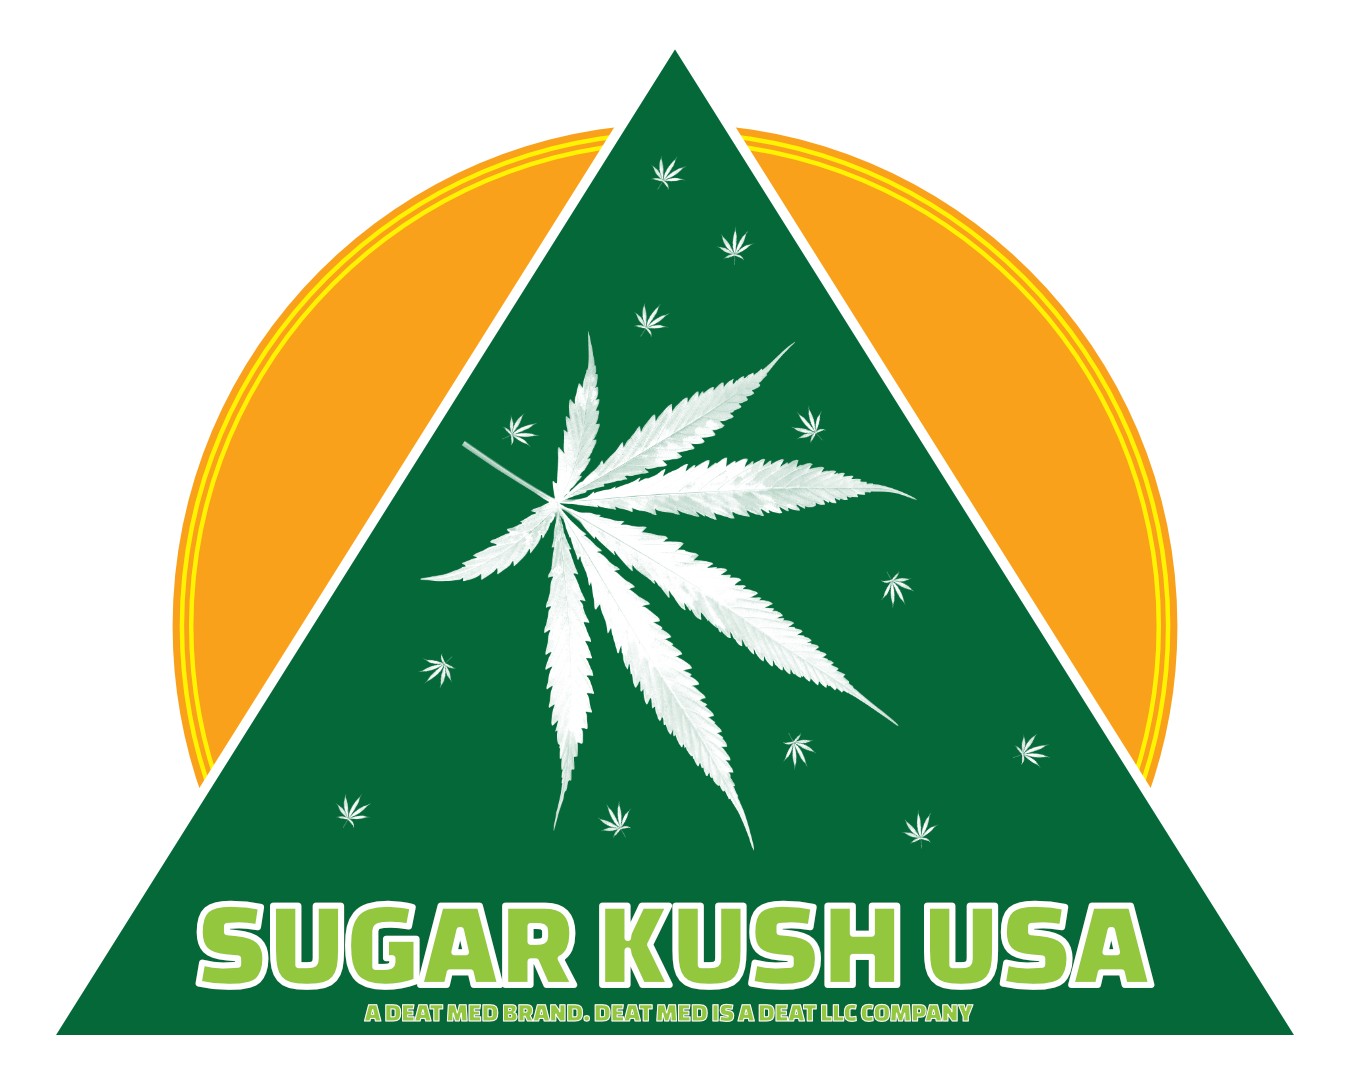 Sugar Kush USA